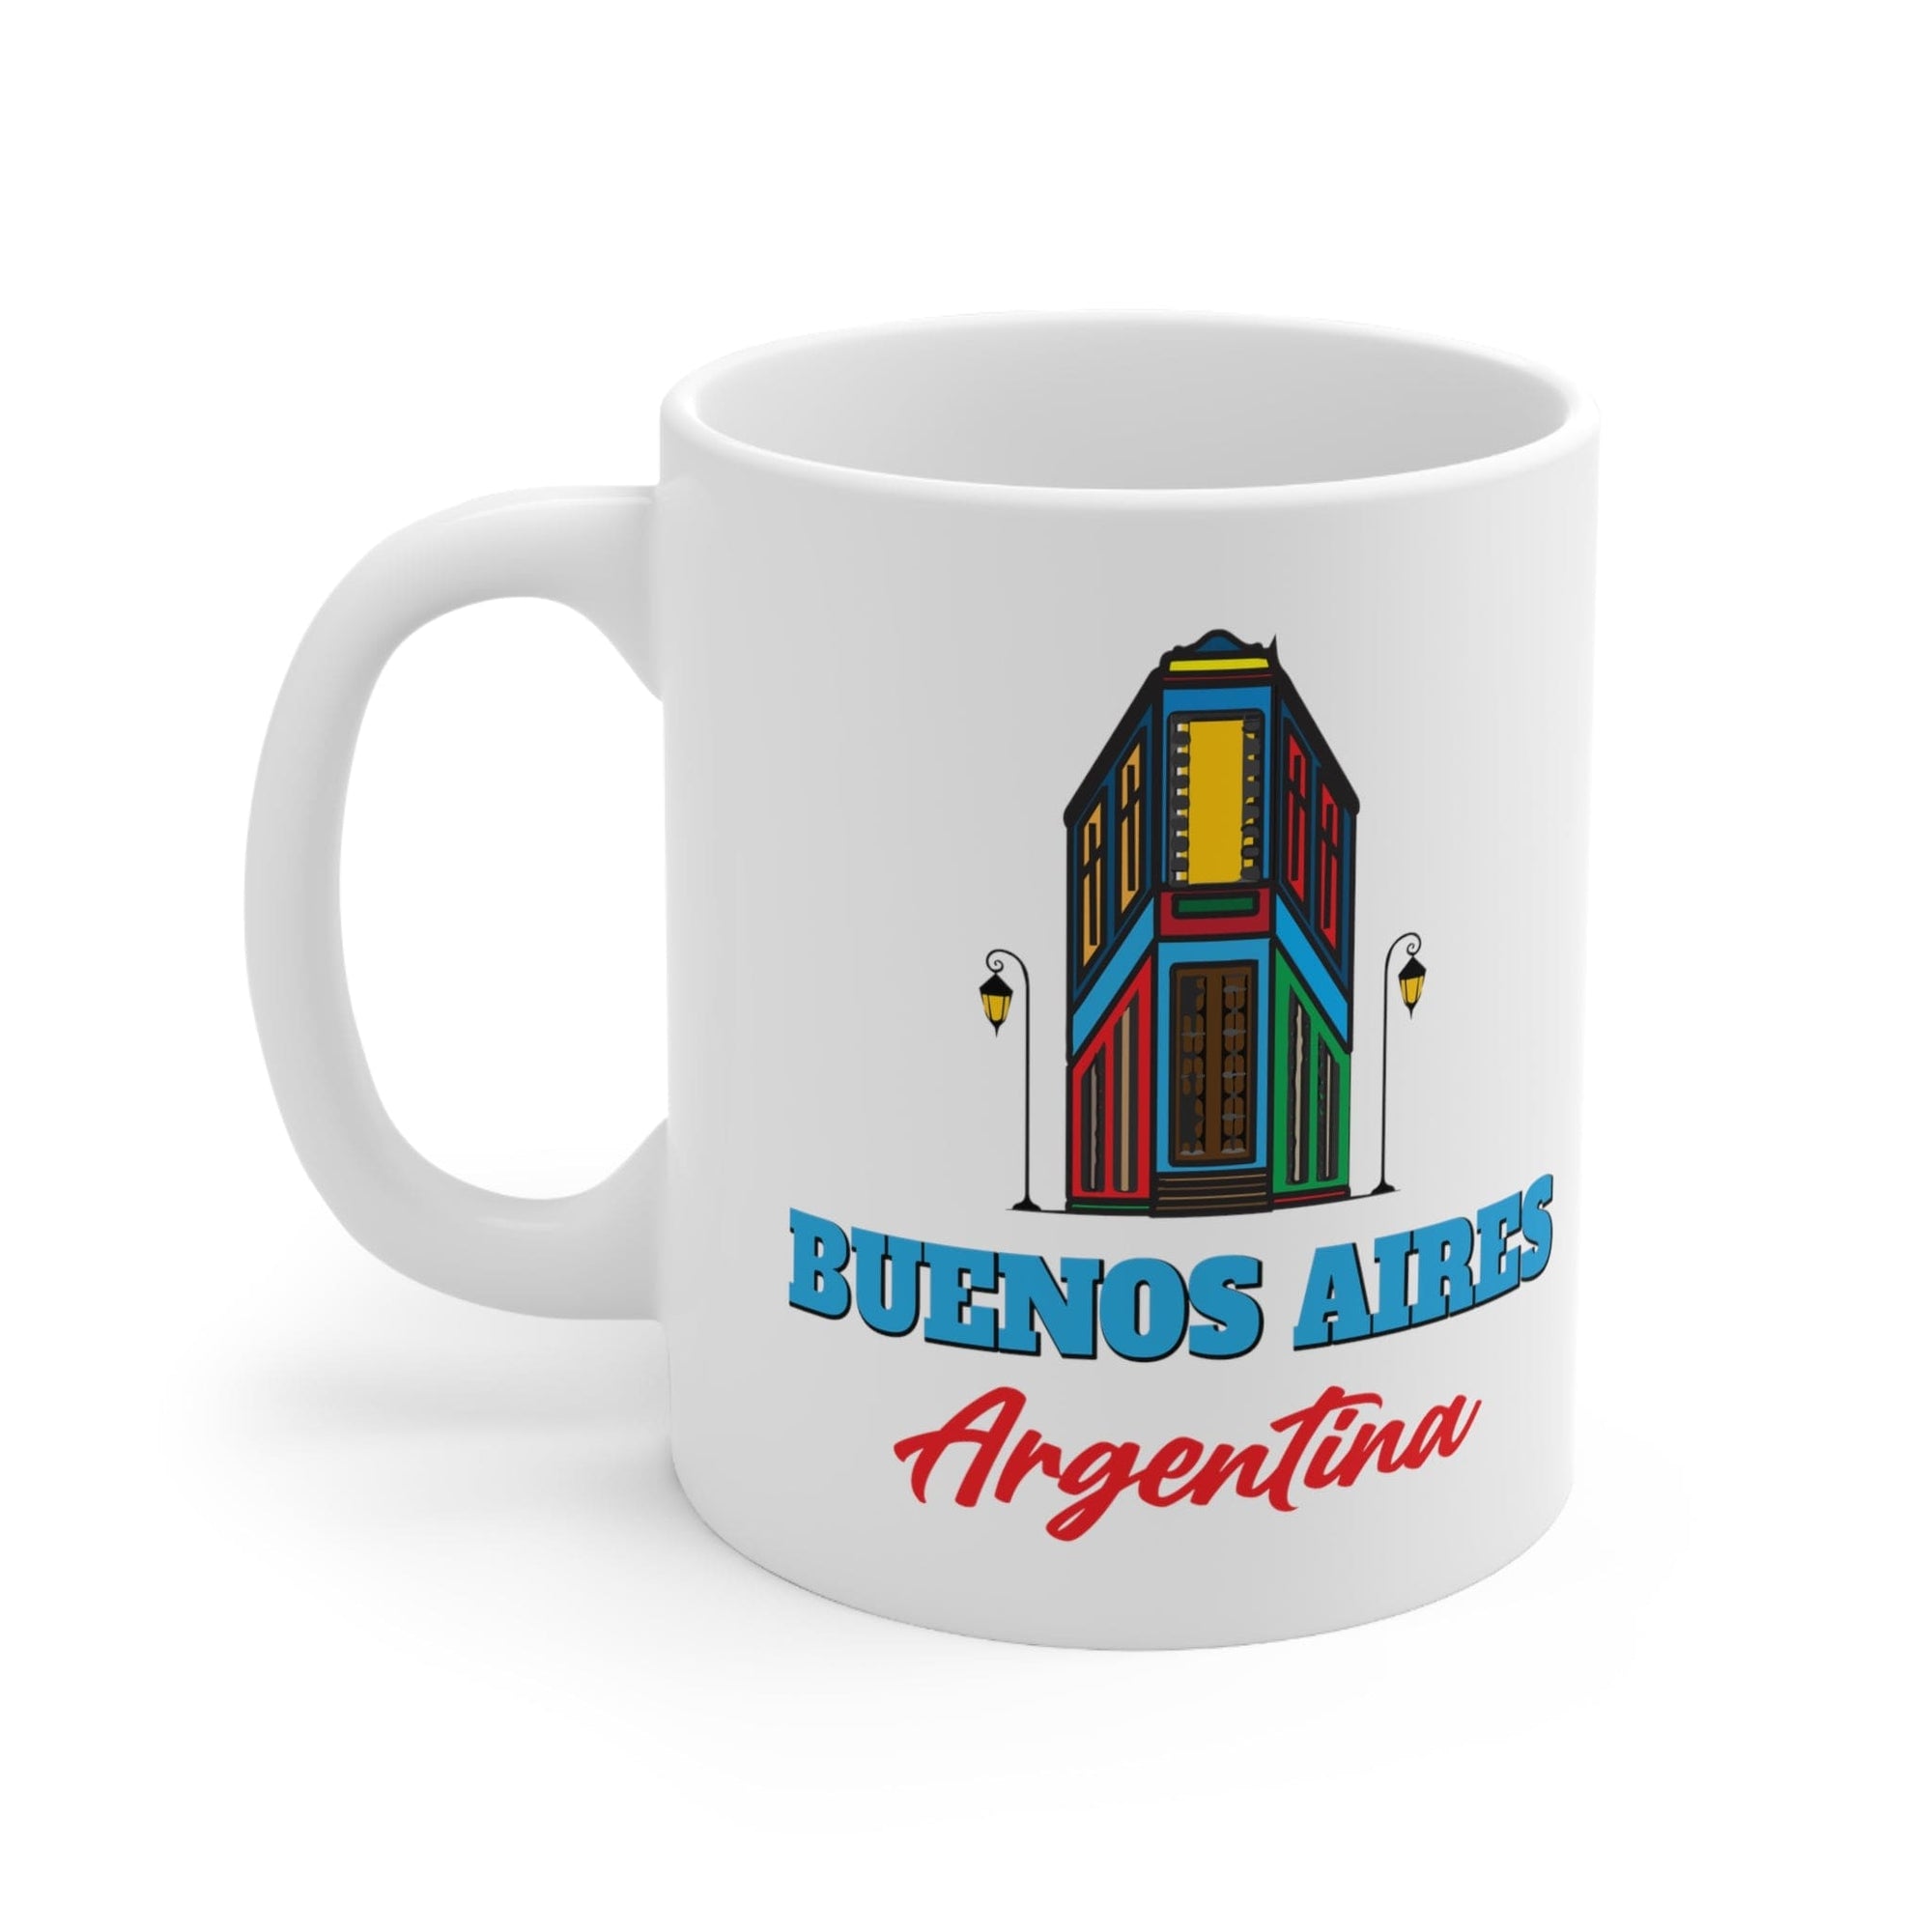 BUENOS AIRES - Awesome Ceramic Mug, Exclusive Design